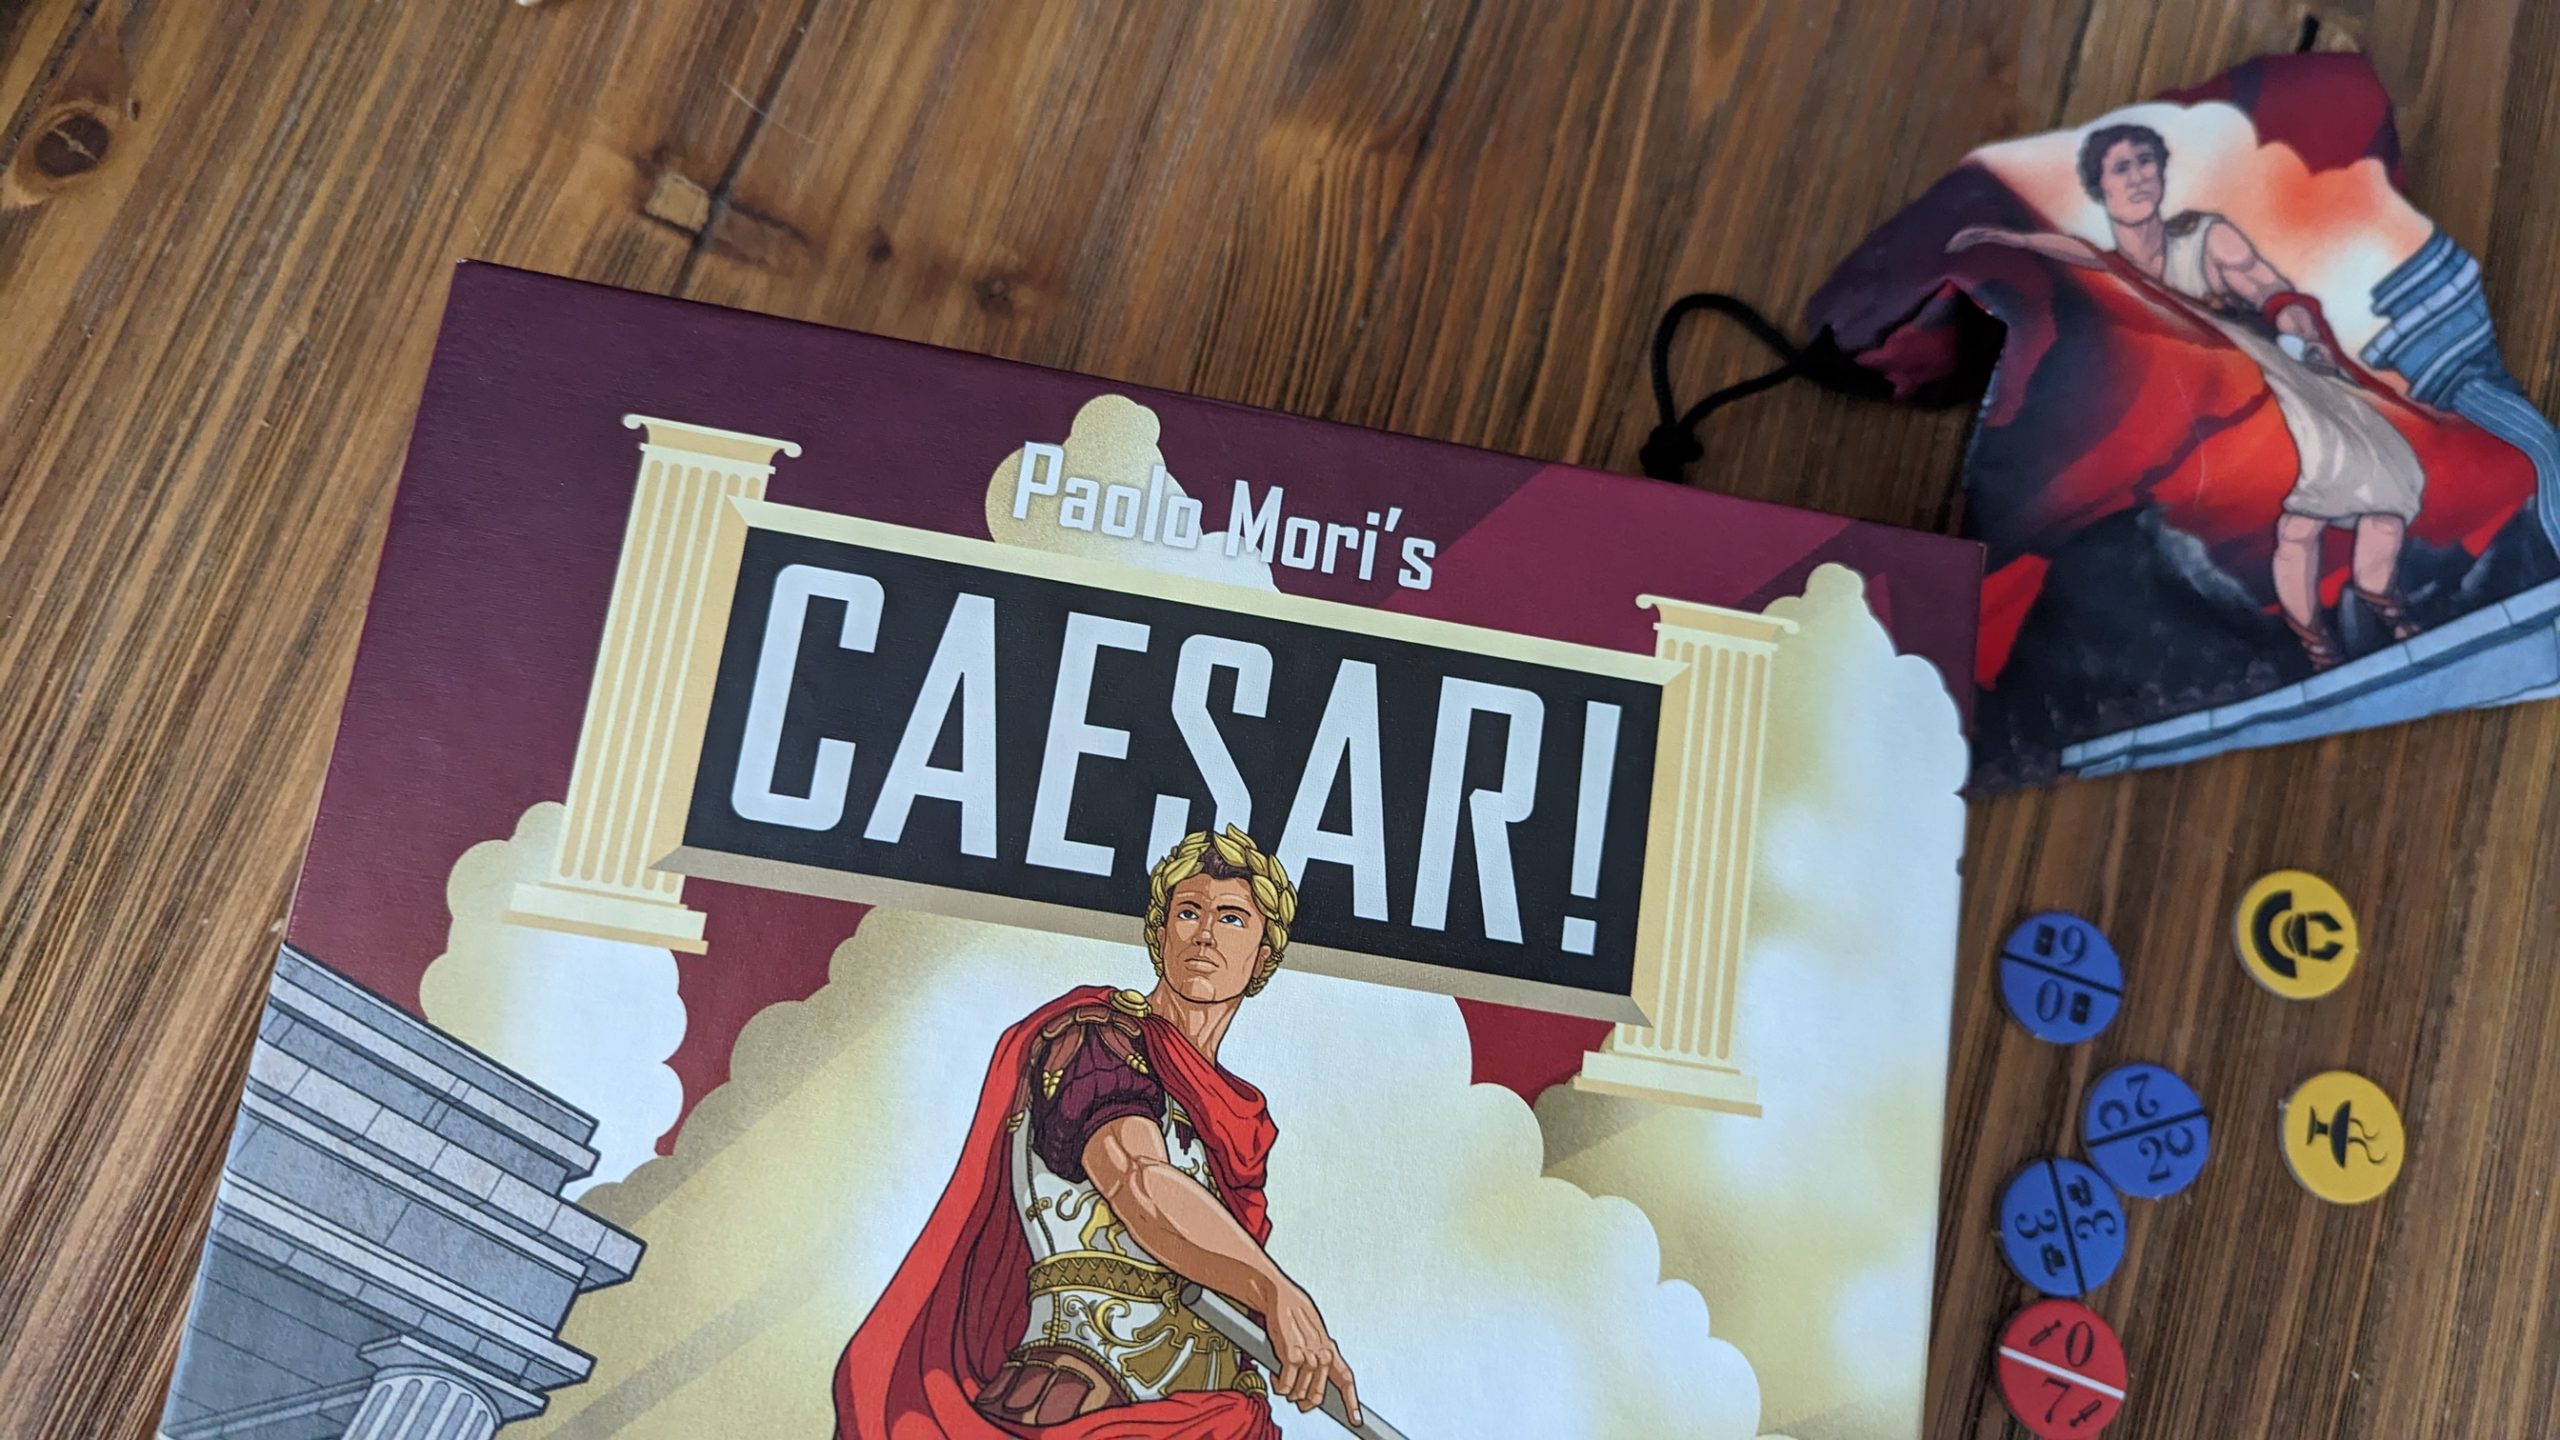 Caesar: Seize Rome in 20 Minutes Insert & Token Guards -  Portugal